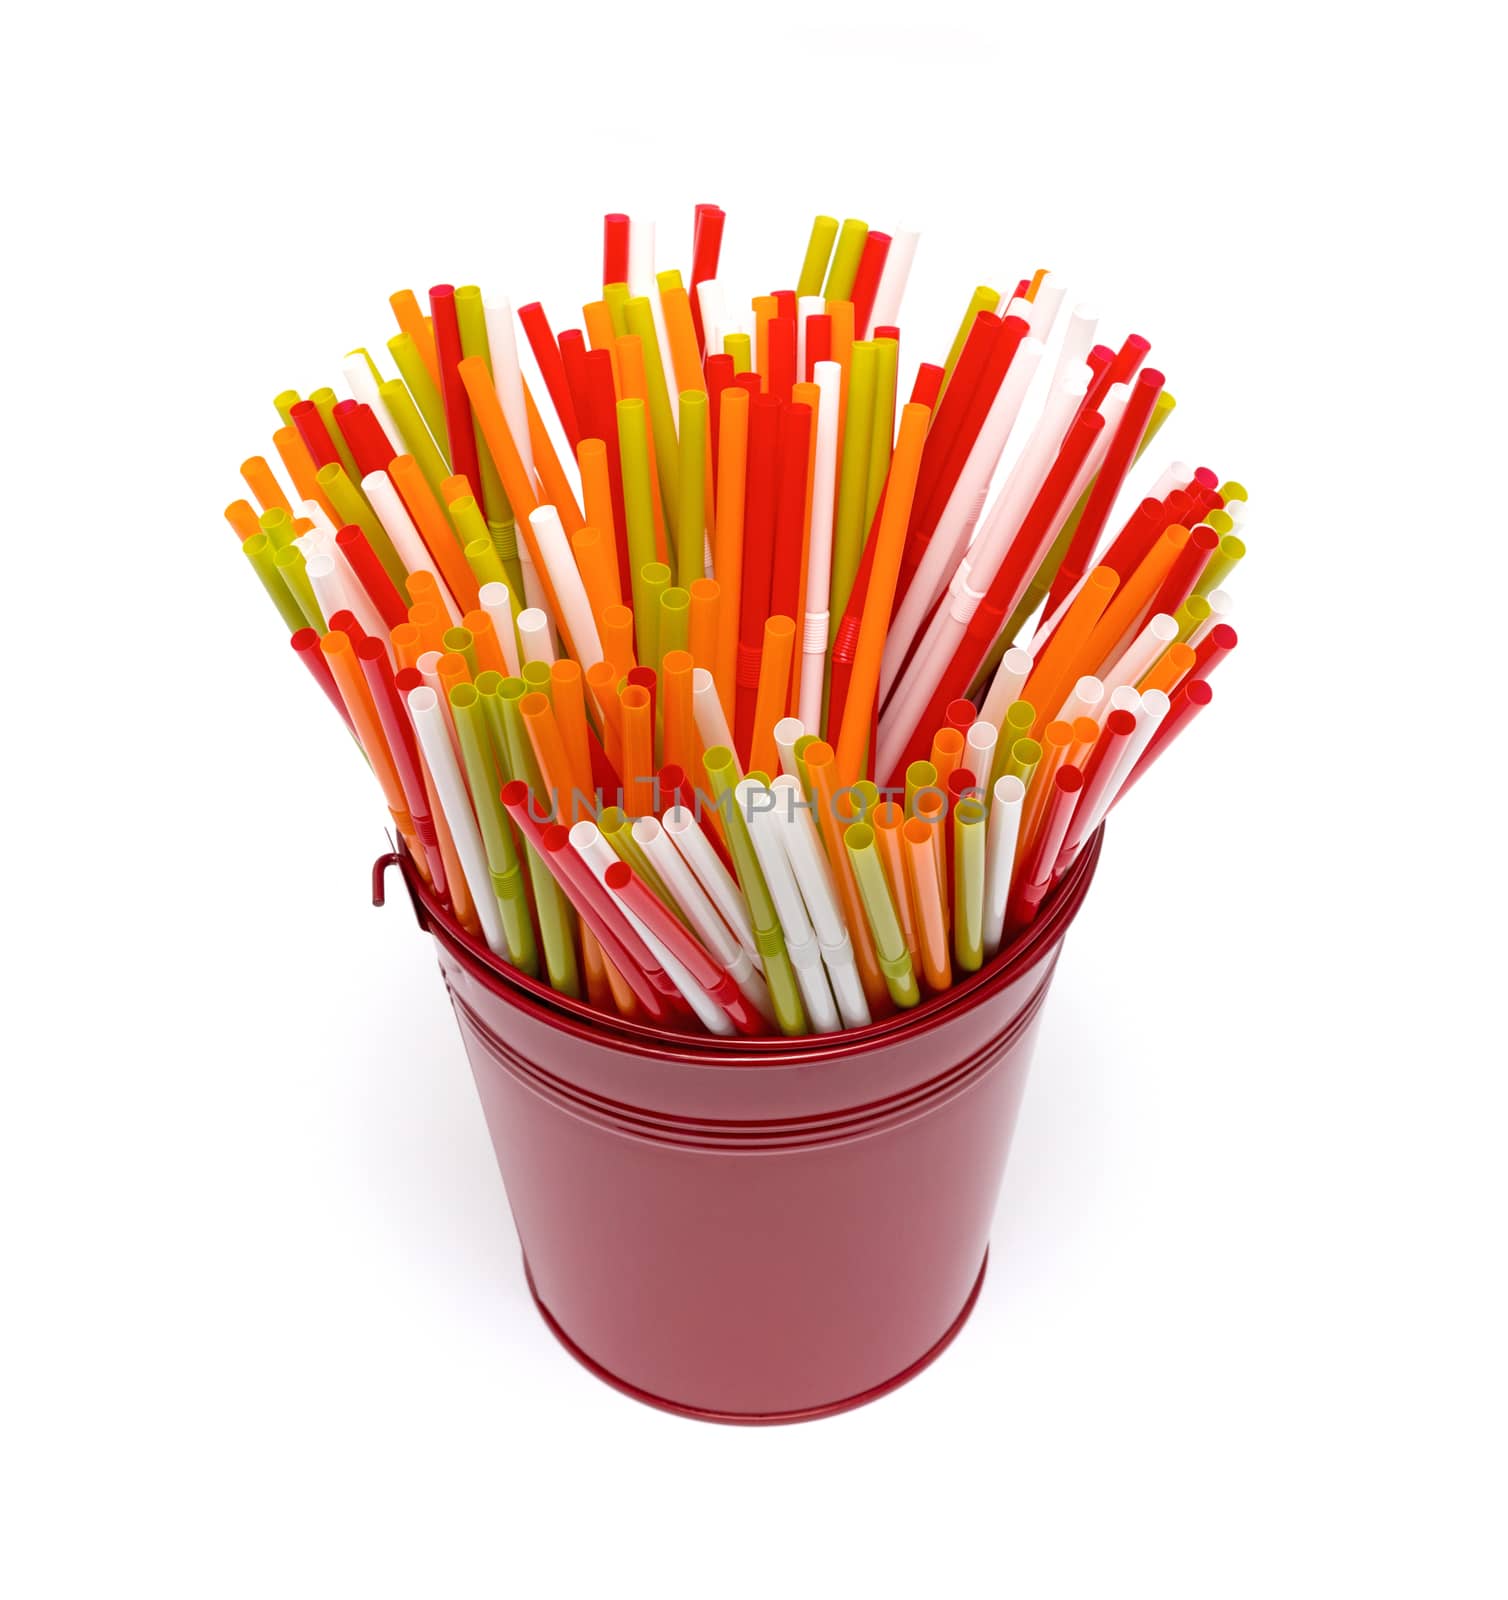 Colored straws in little bucket by DNKSTUDIO